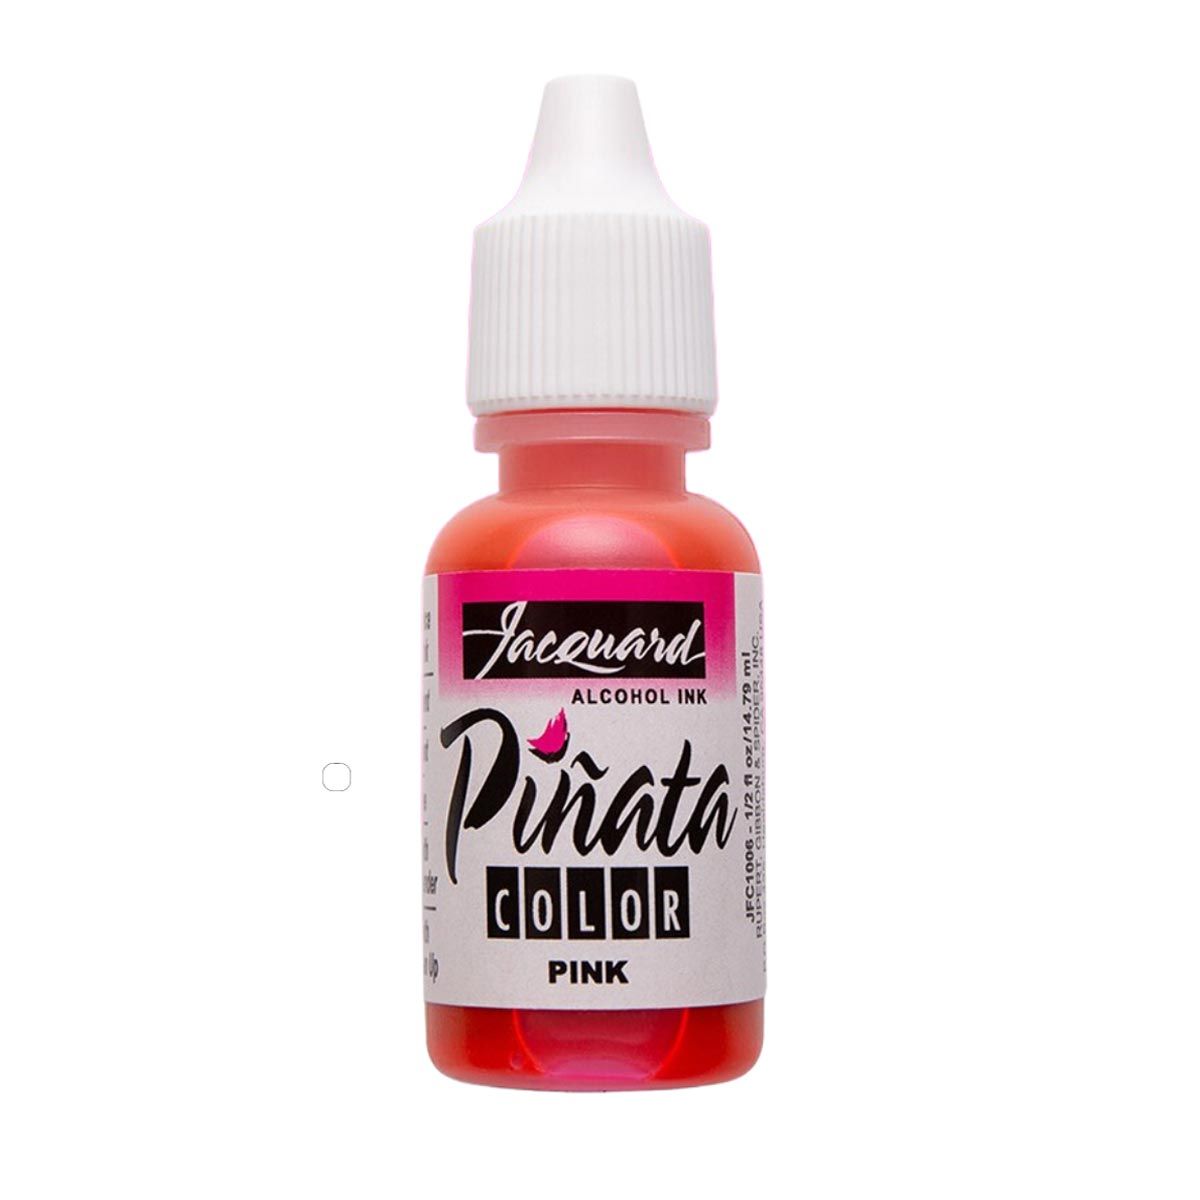 Pinata Color Alcohol Ink Pink .5 oz